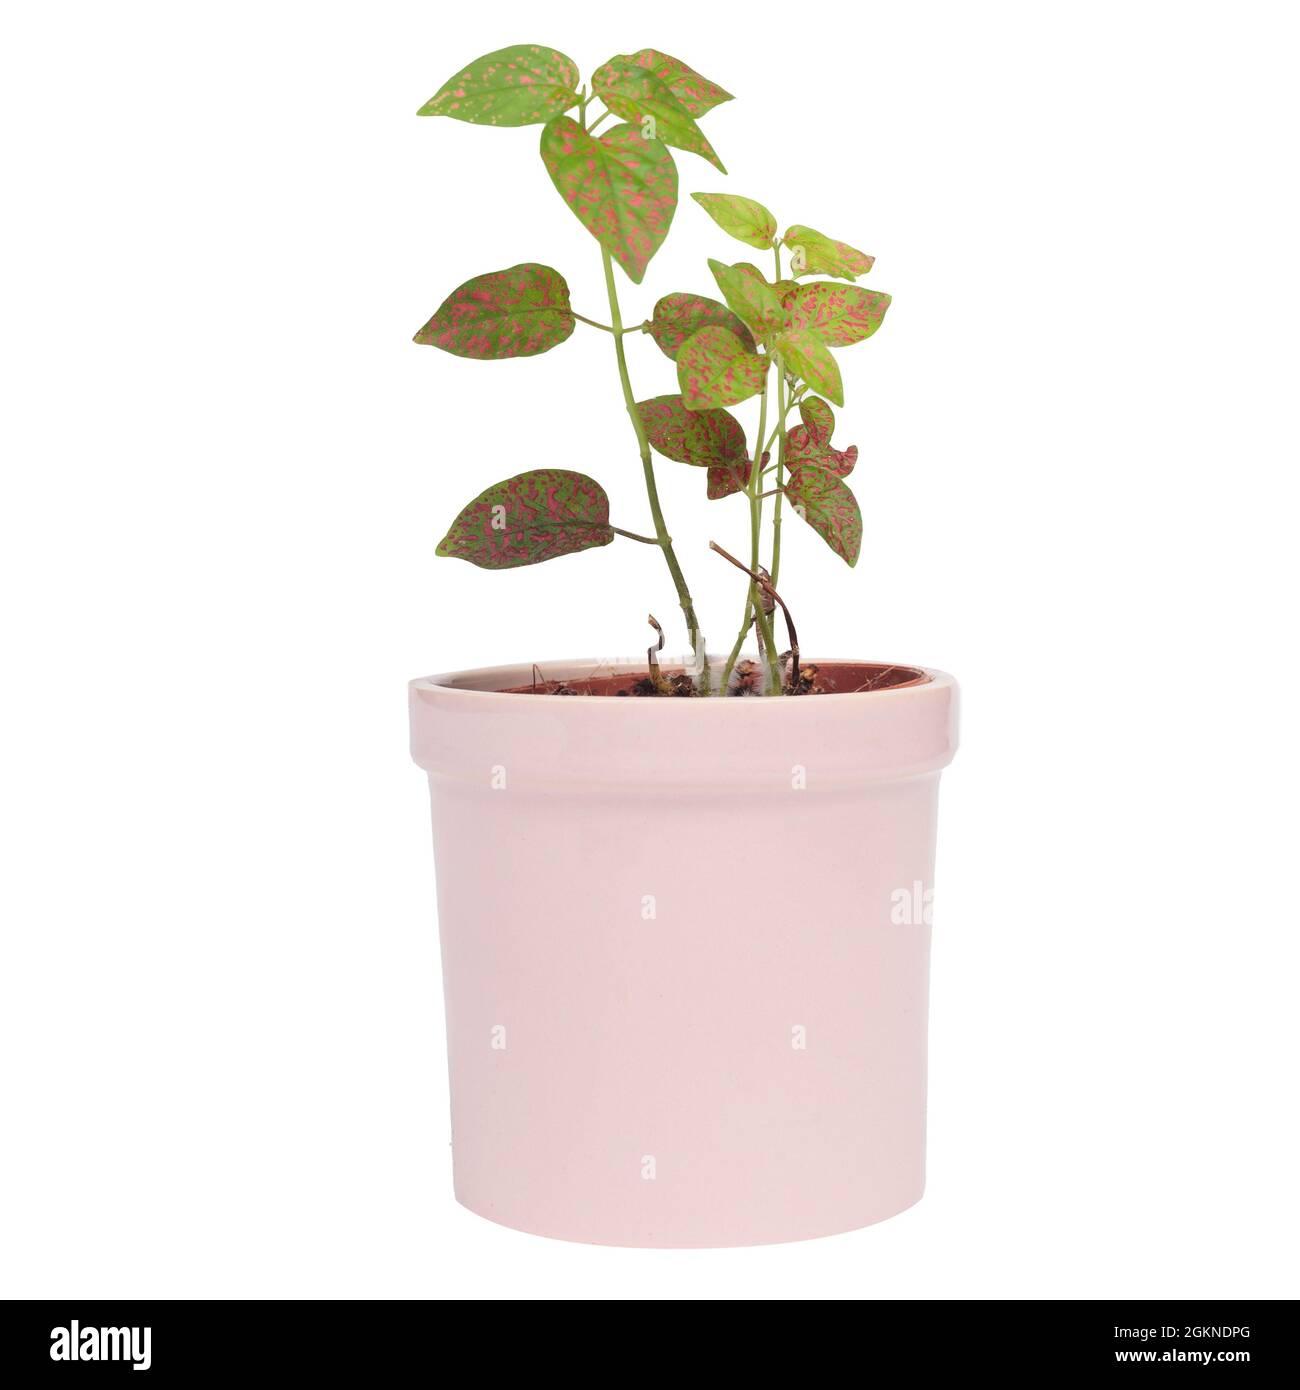 Hypoestes phyllostacbya leaf isolated on white background. Pink pot Stock Photo